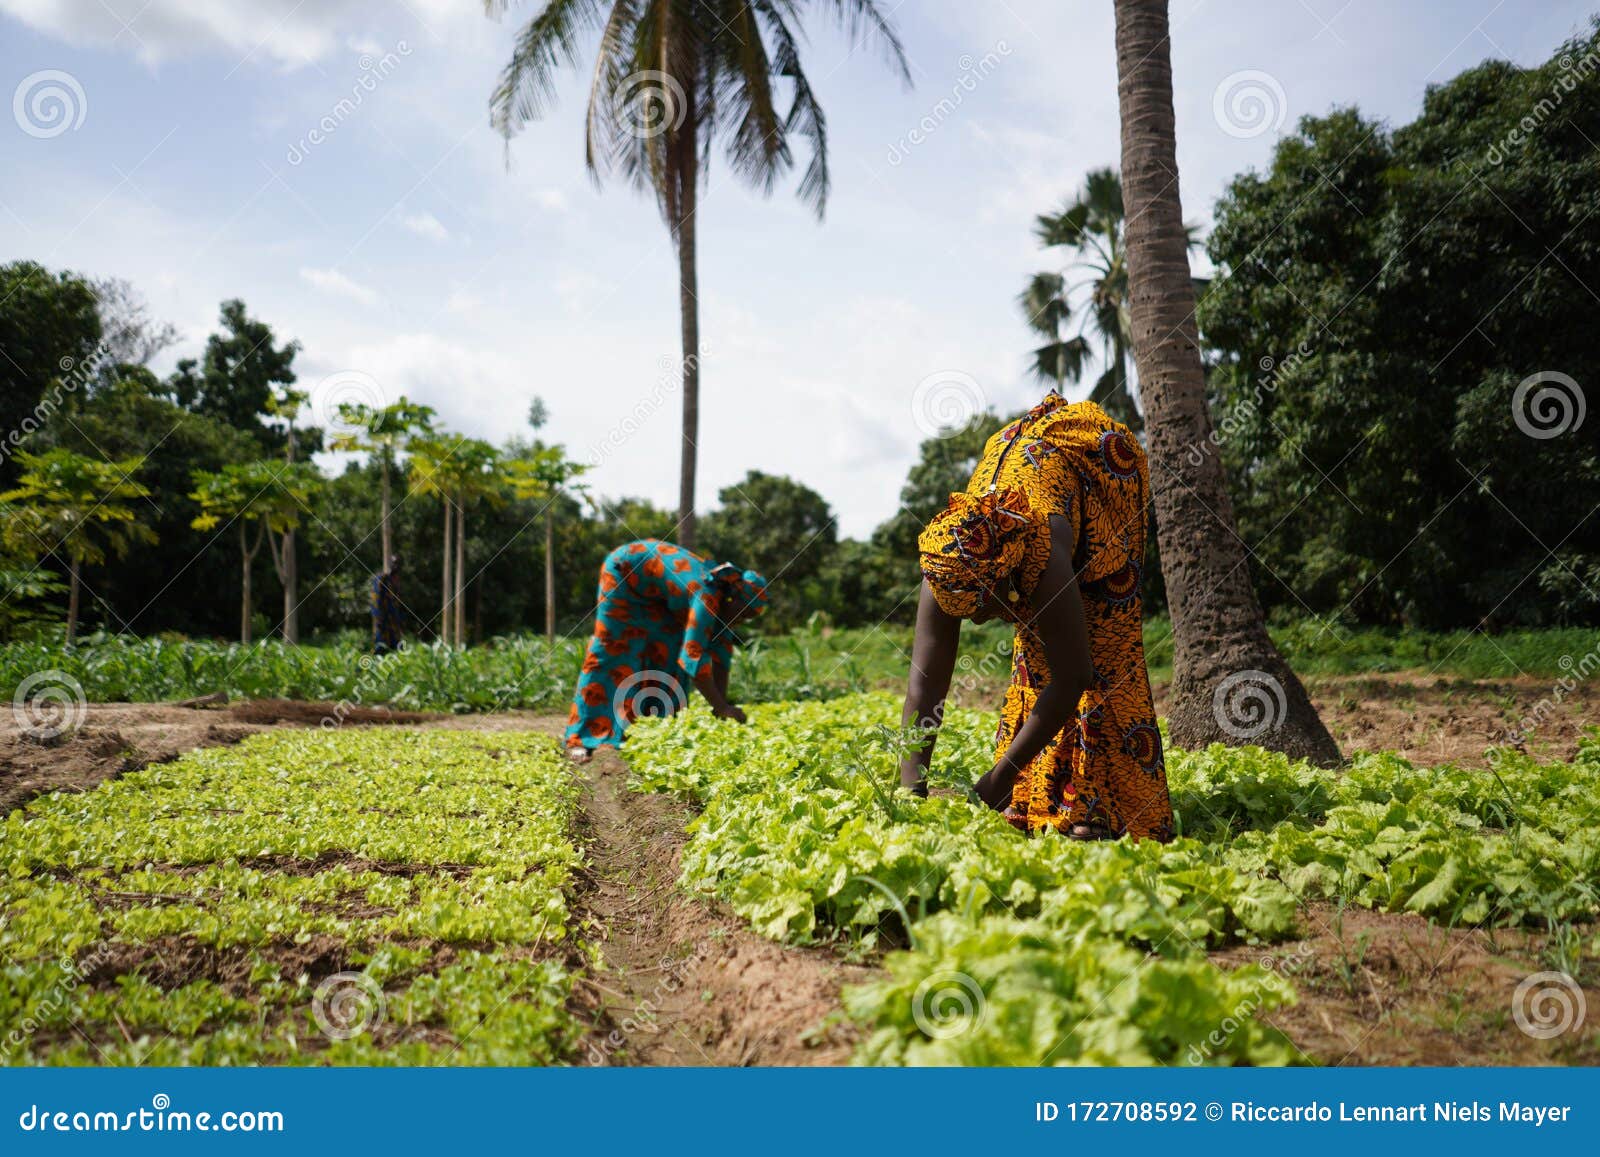 two women farmers weeding a salad garden in a west african rural community